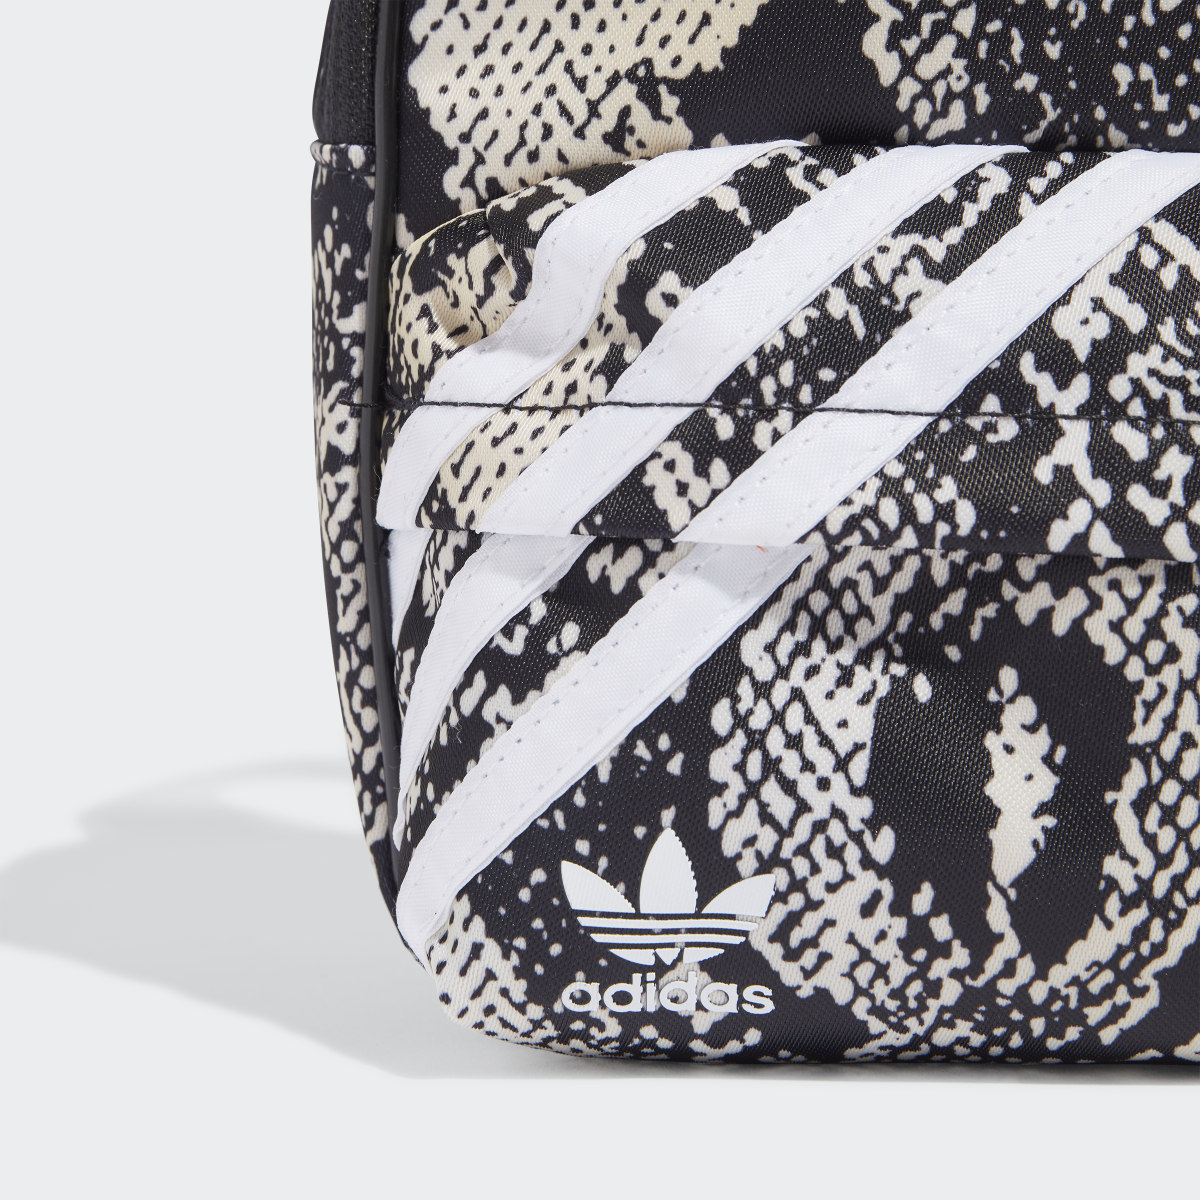 Adidas Snake Graphic Mini Backpack. 6